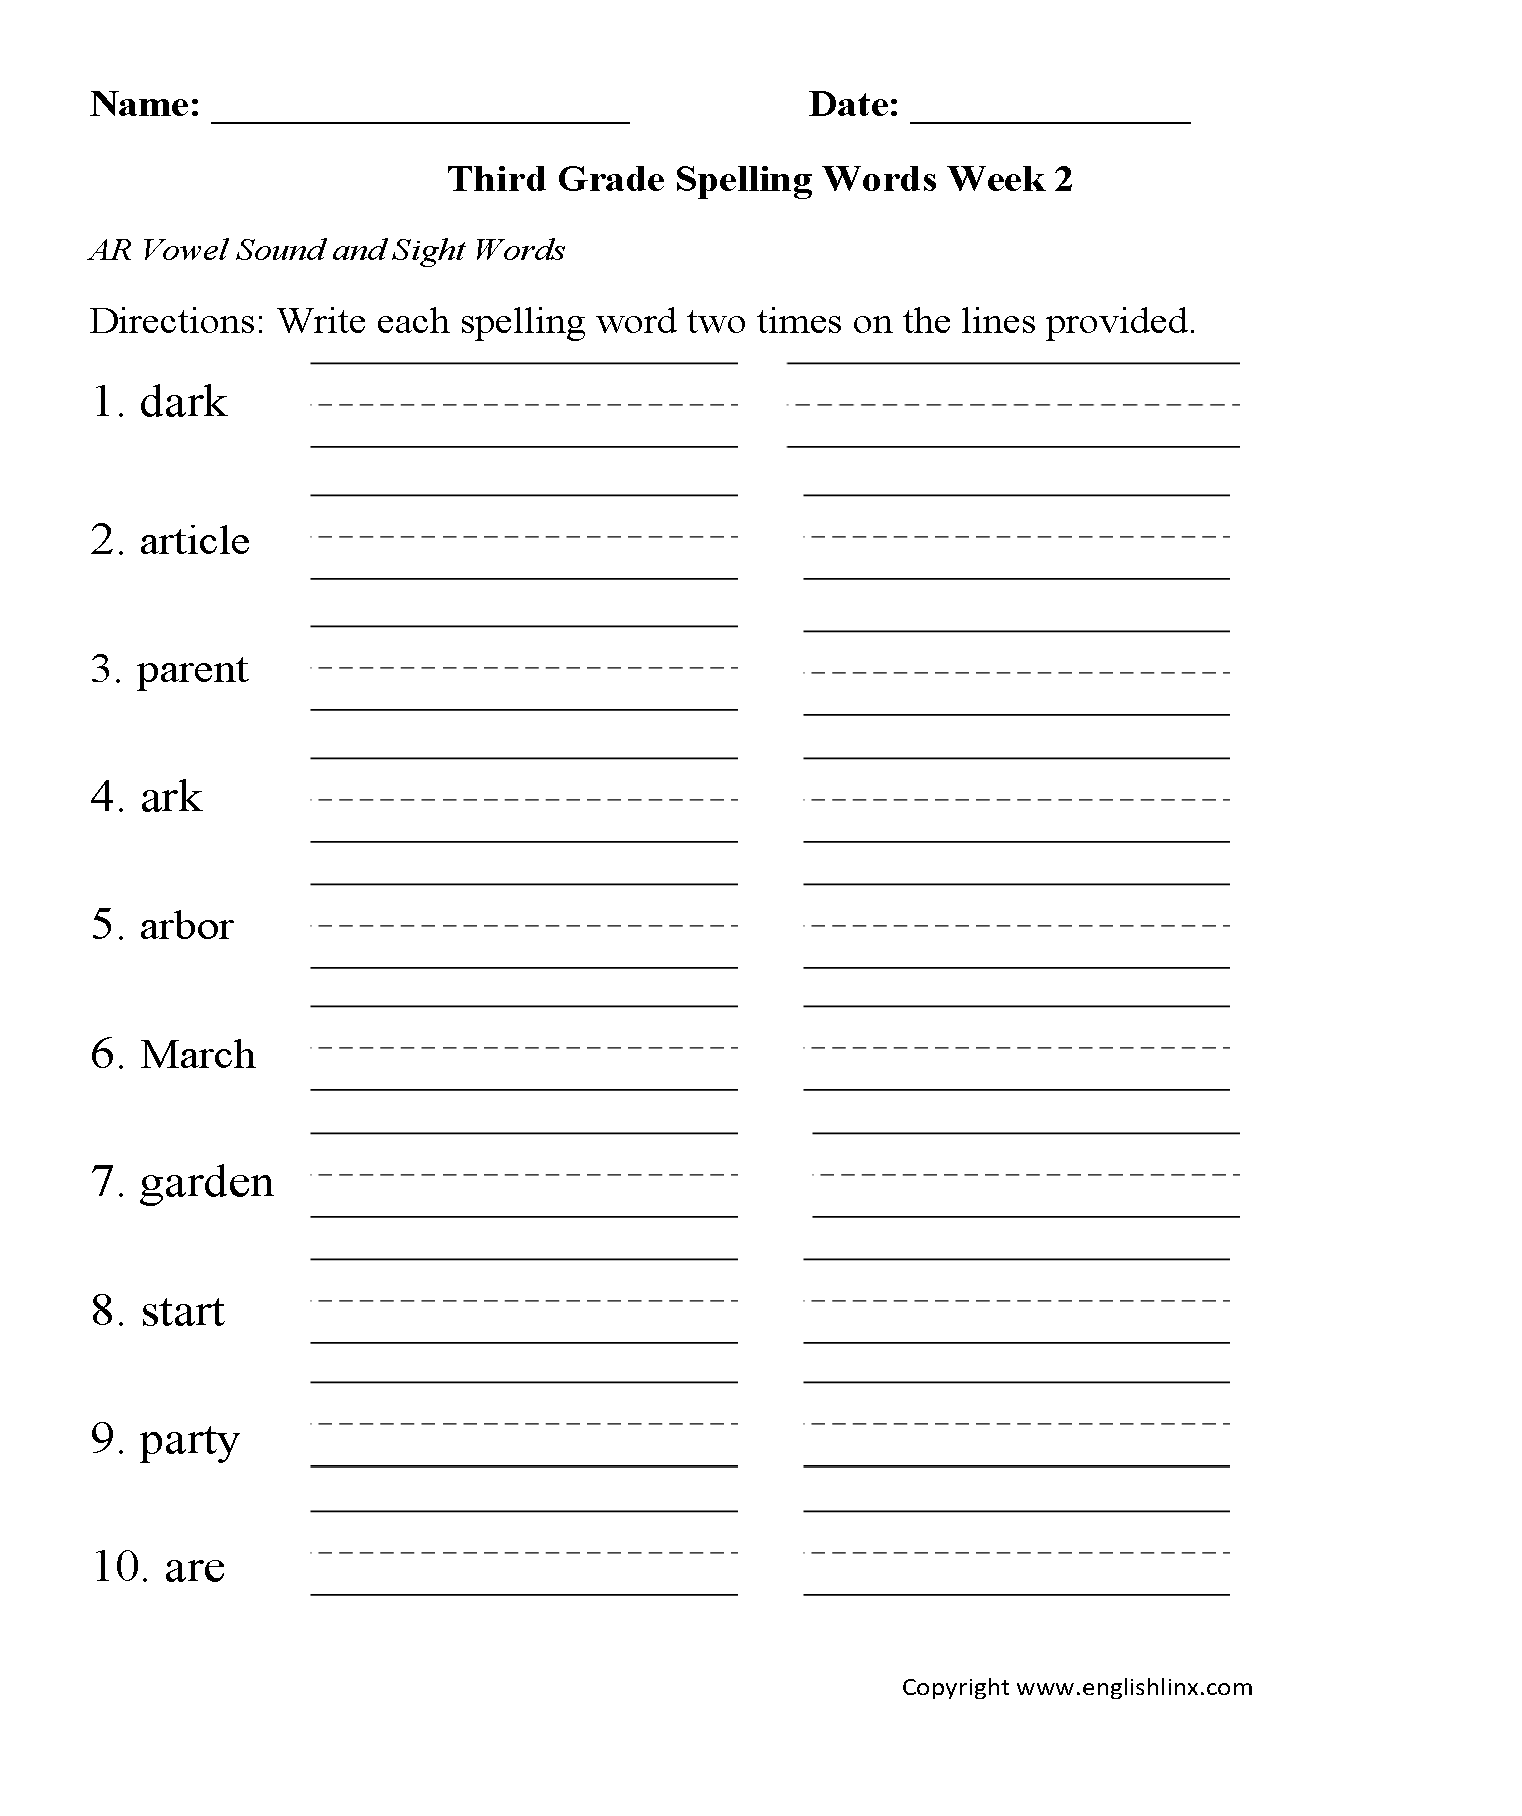 Spelling Worksheets | Third Grade Spelling Worksheets